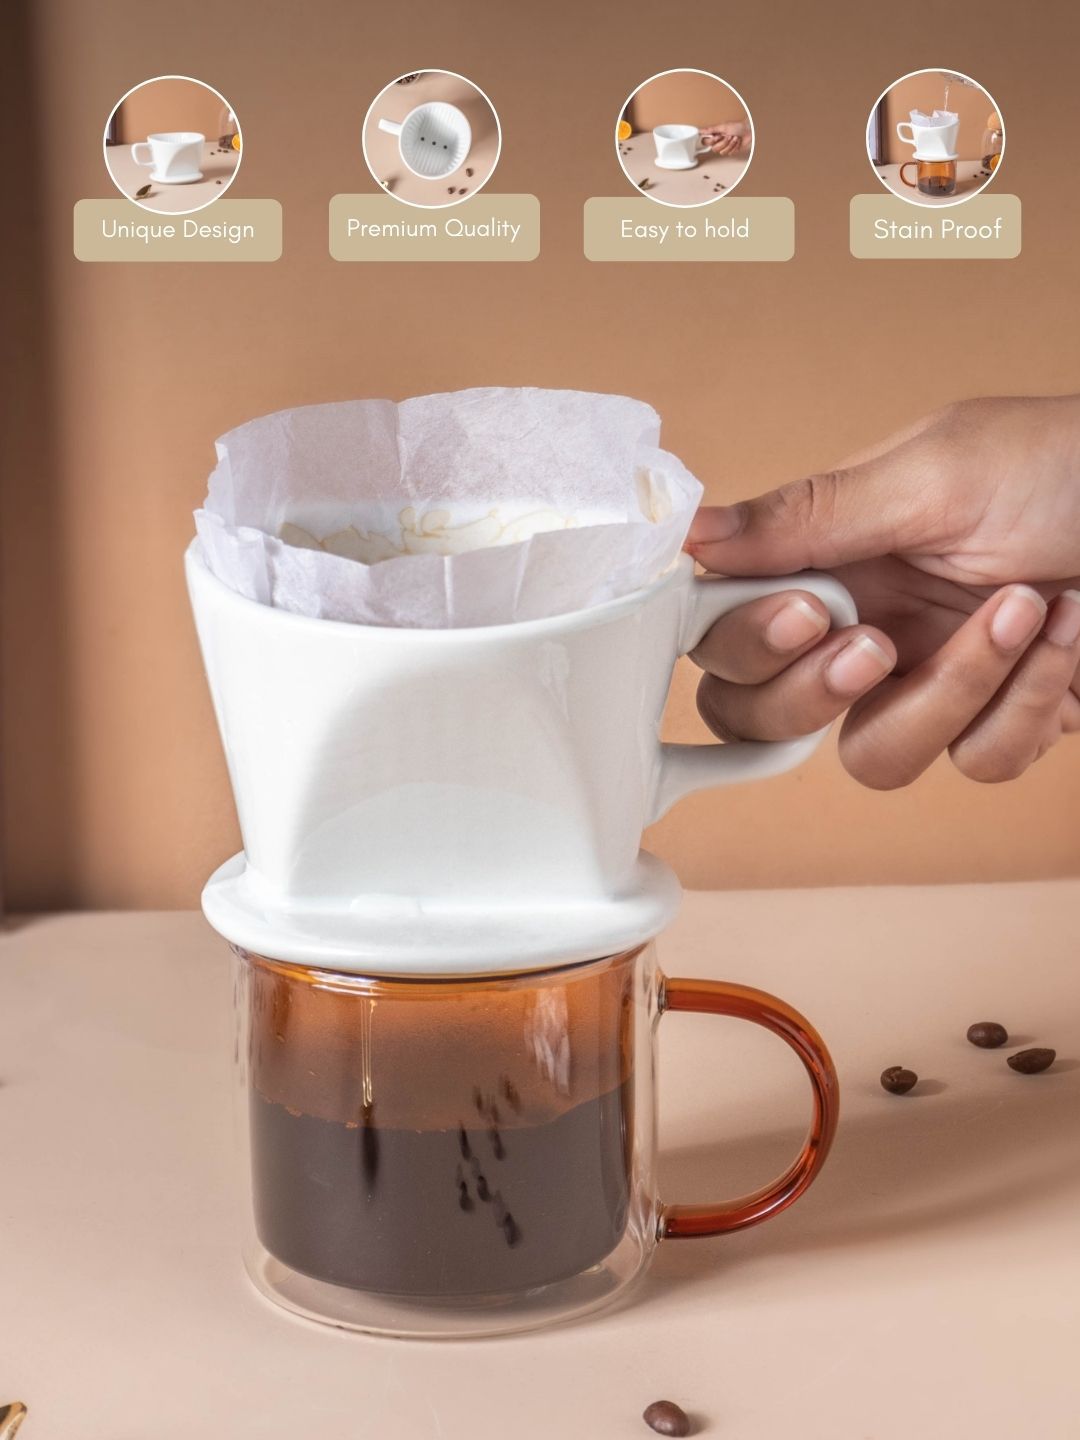 Nestasia Solid Ceramic Coffee Filter Price in India